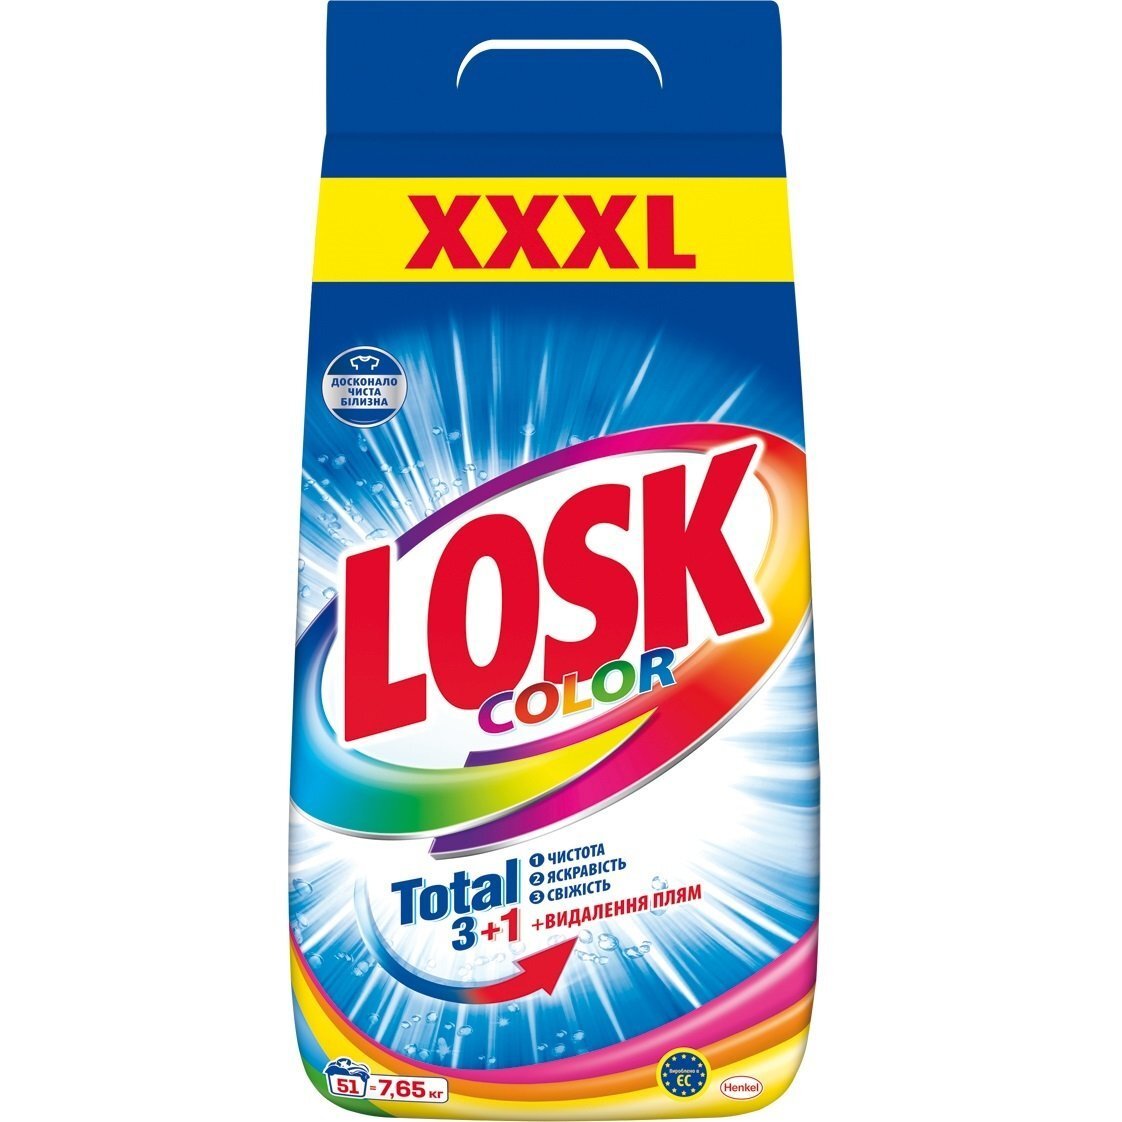 Порошок для прання Losk Color автомат 7,65 кгфото1